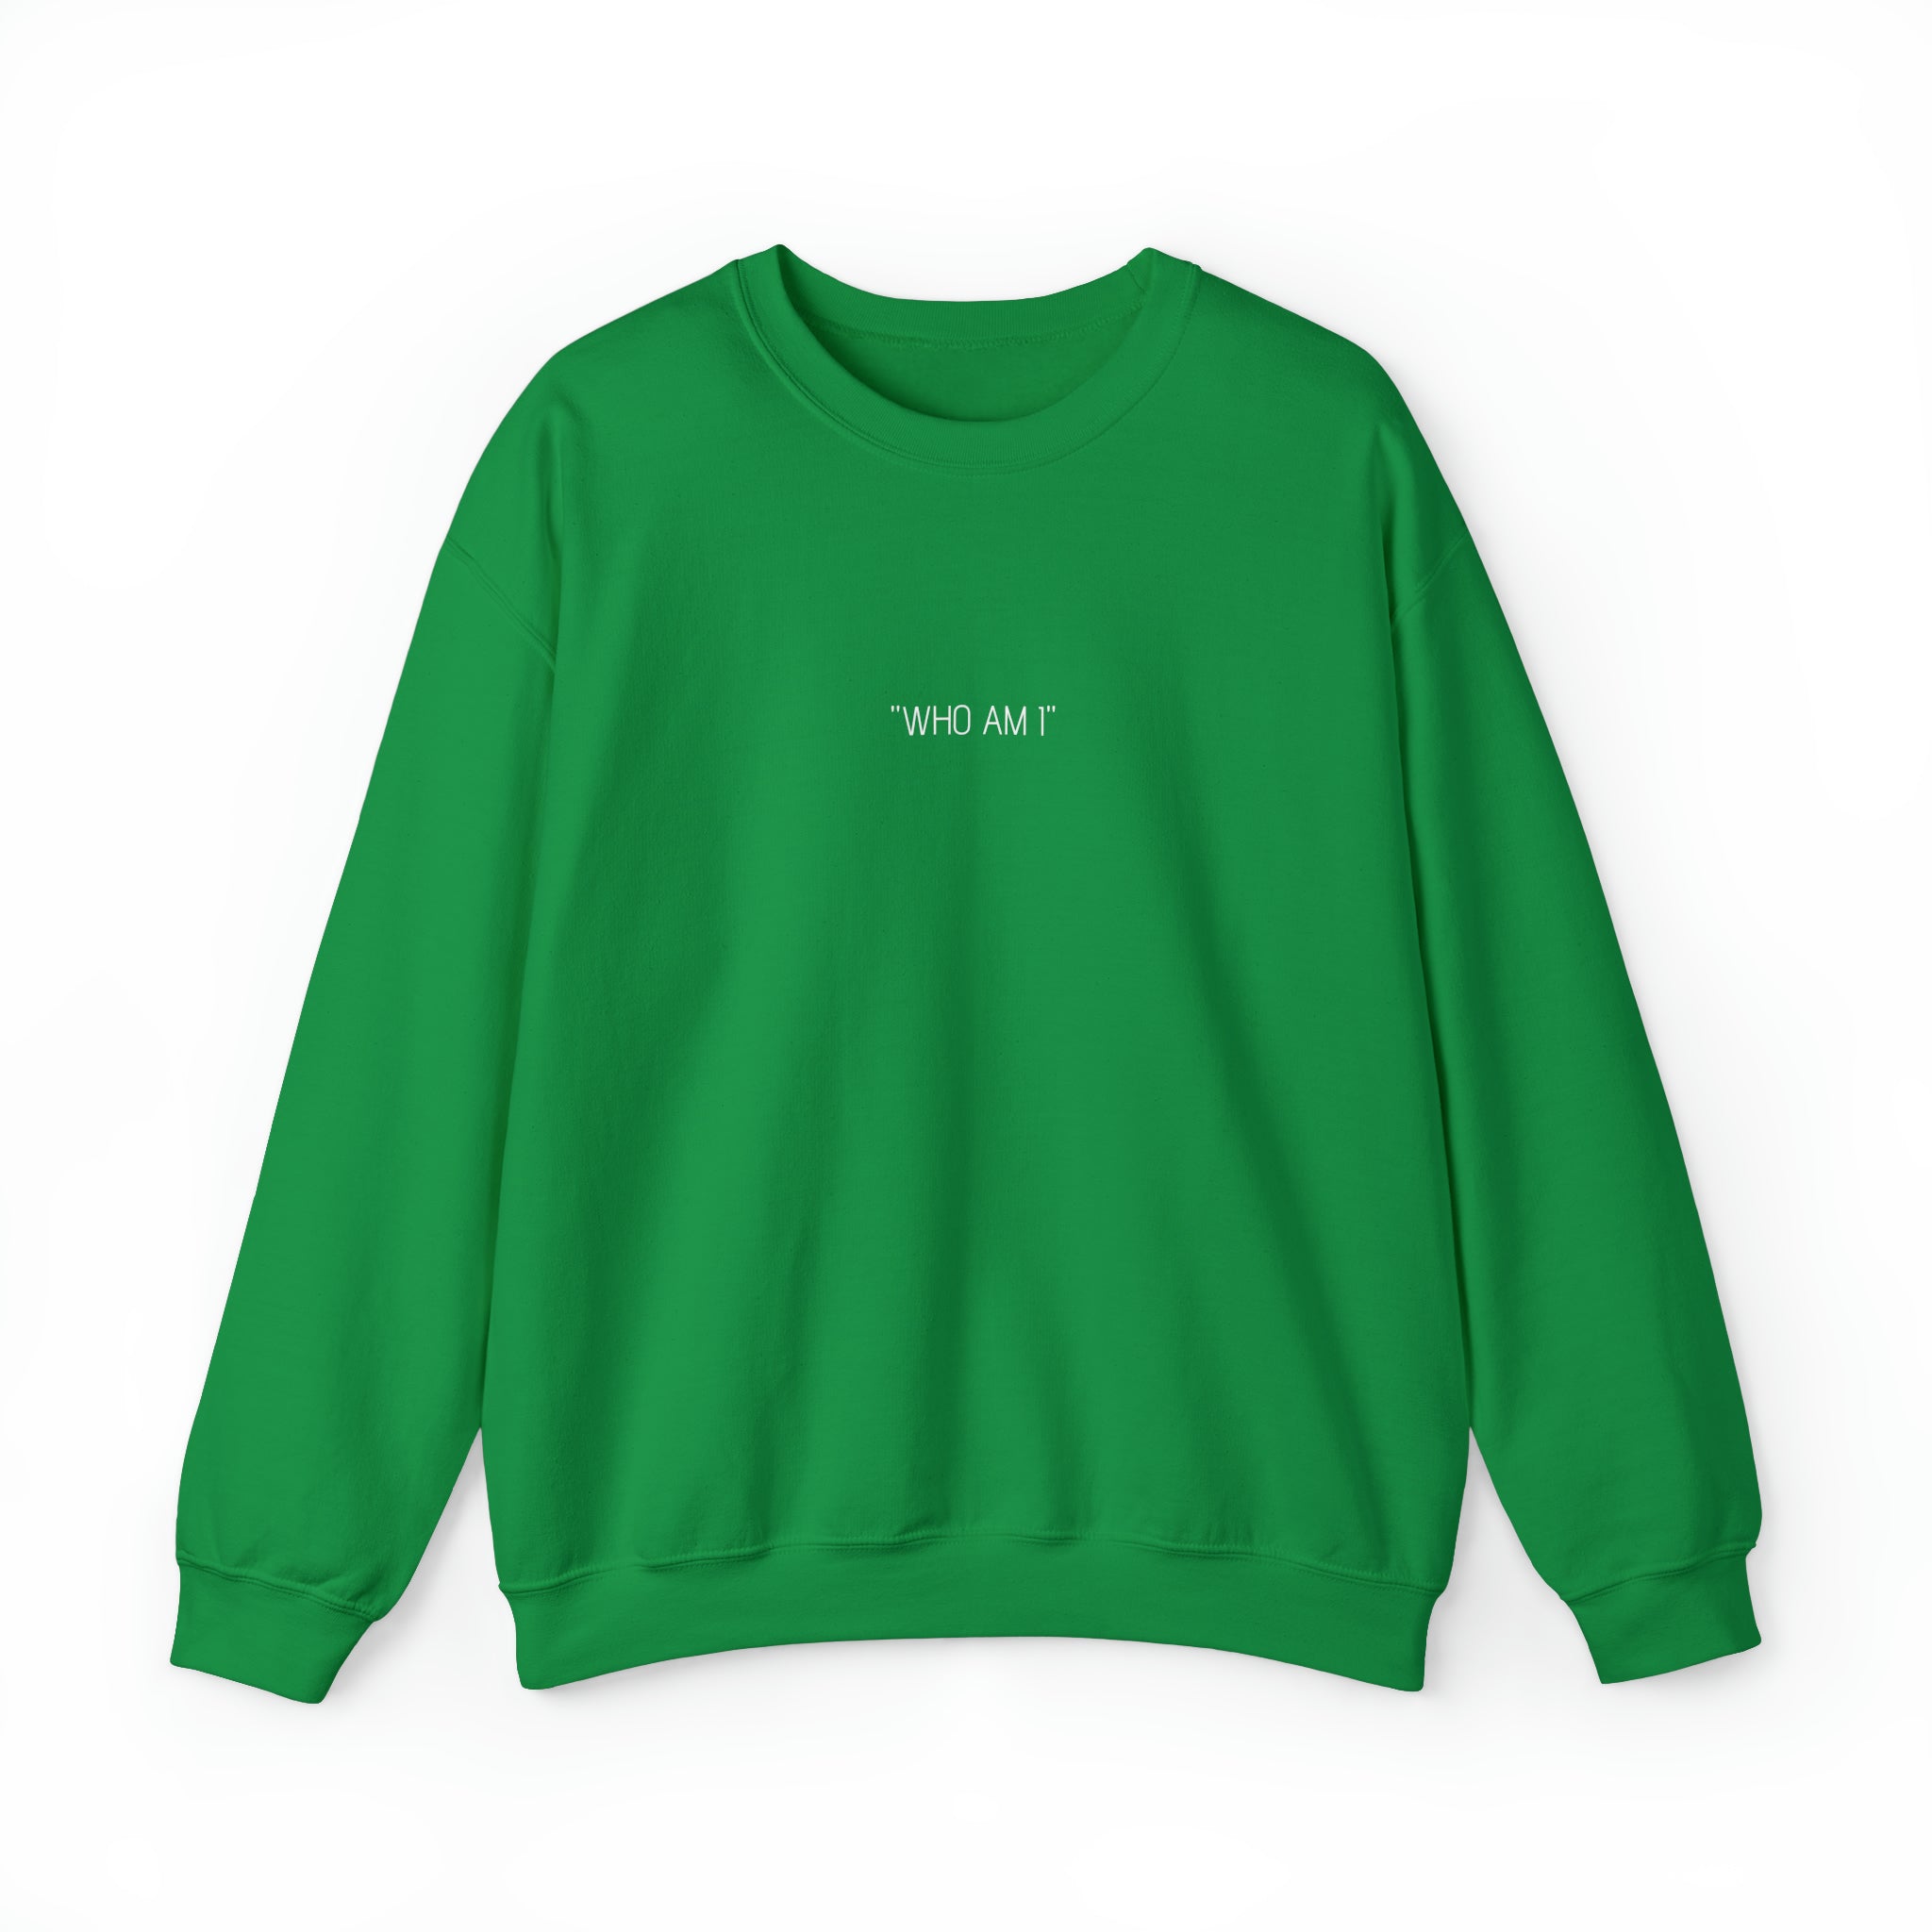 "WHO AM I" Motivational Cotton Sweatshirt Pullover